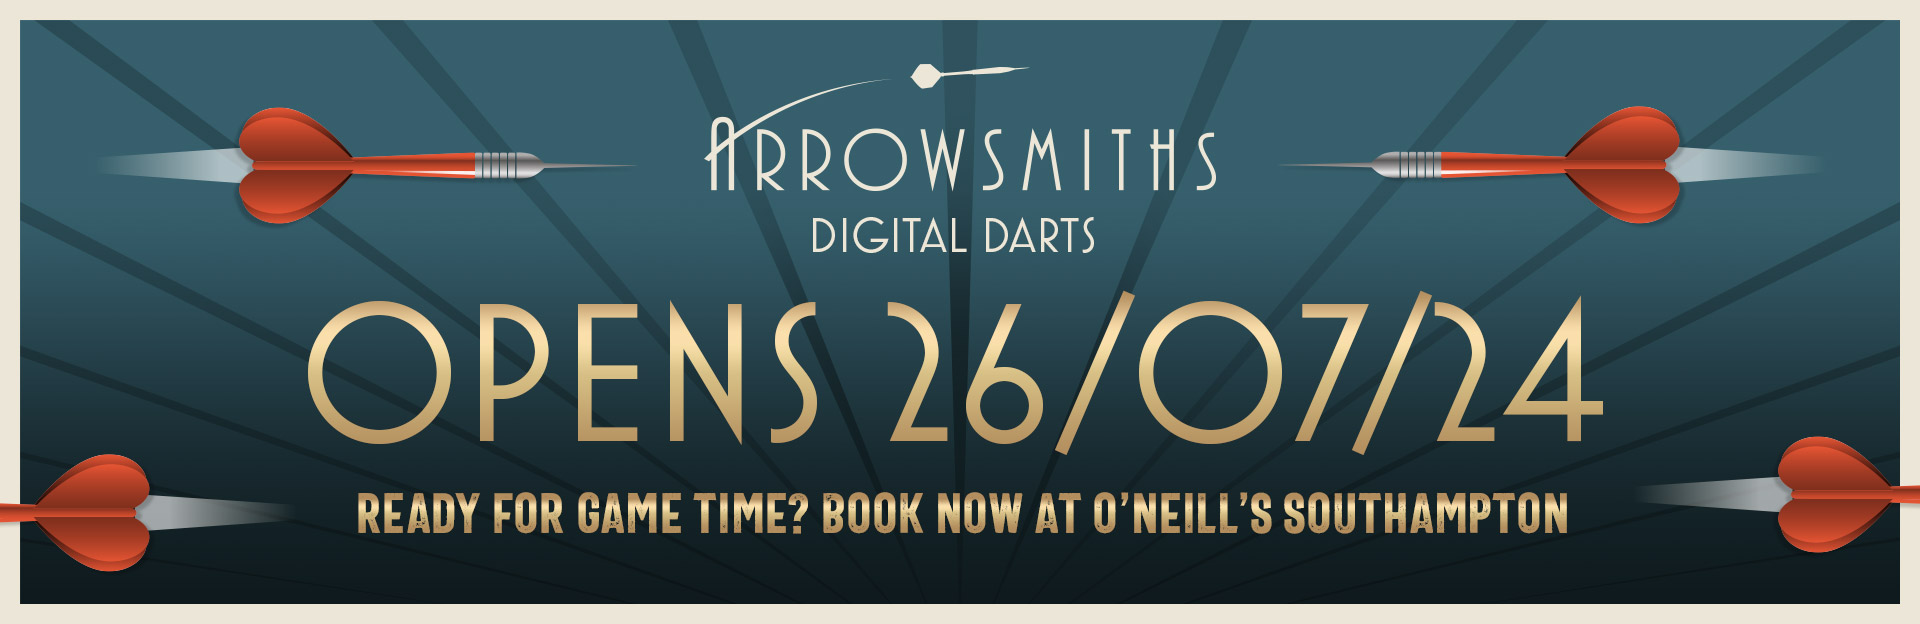 hs-2024-arrowsmiths-southampton-open-banner.jpg